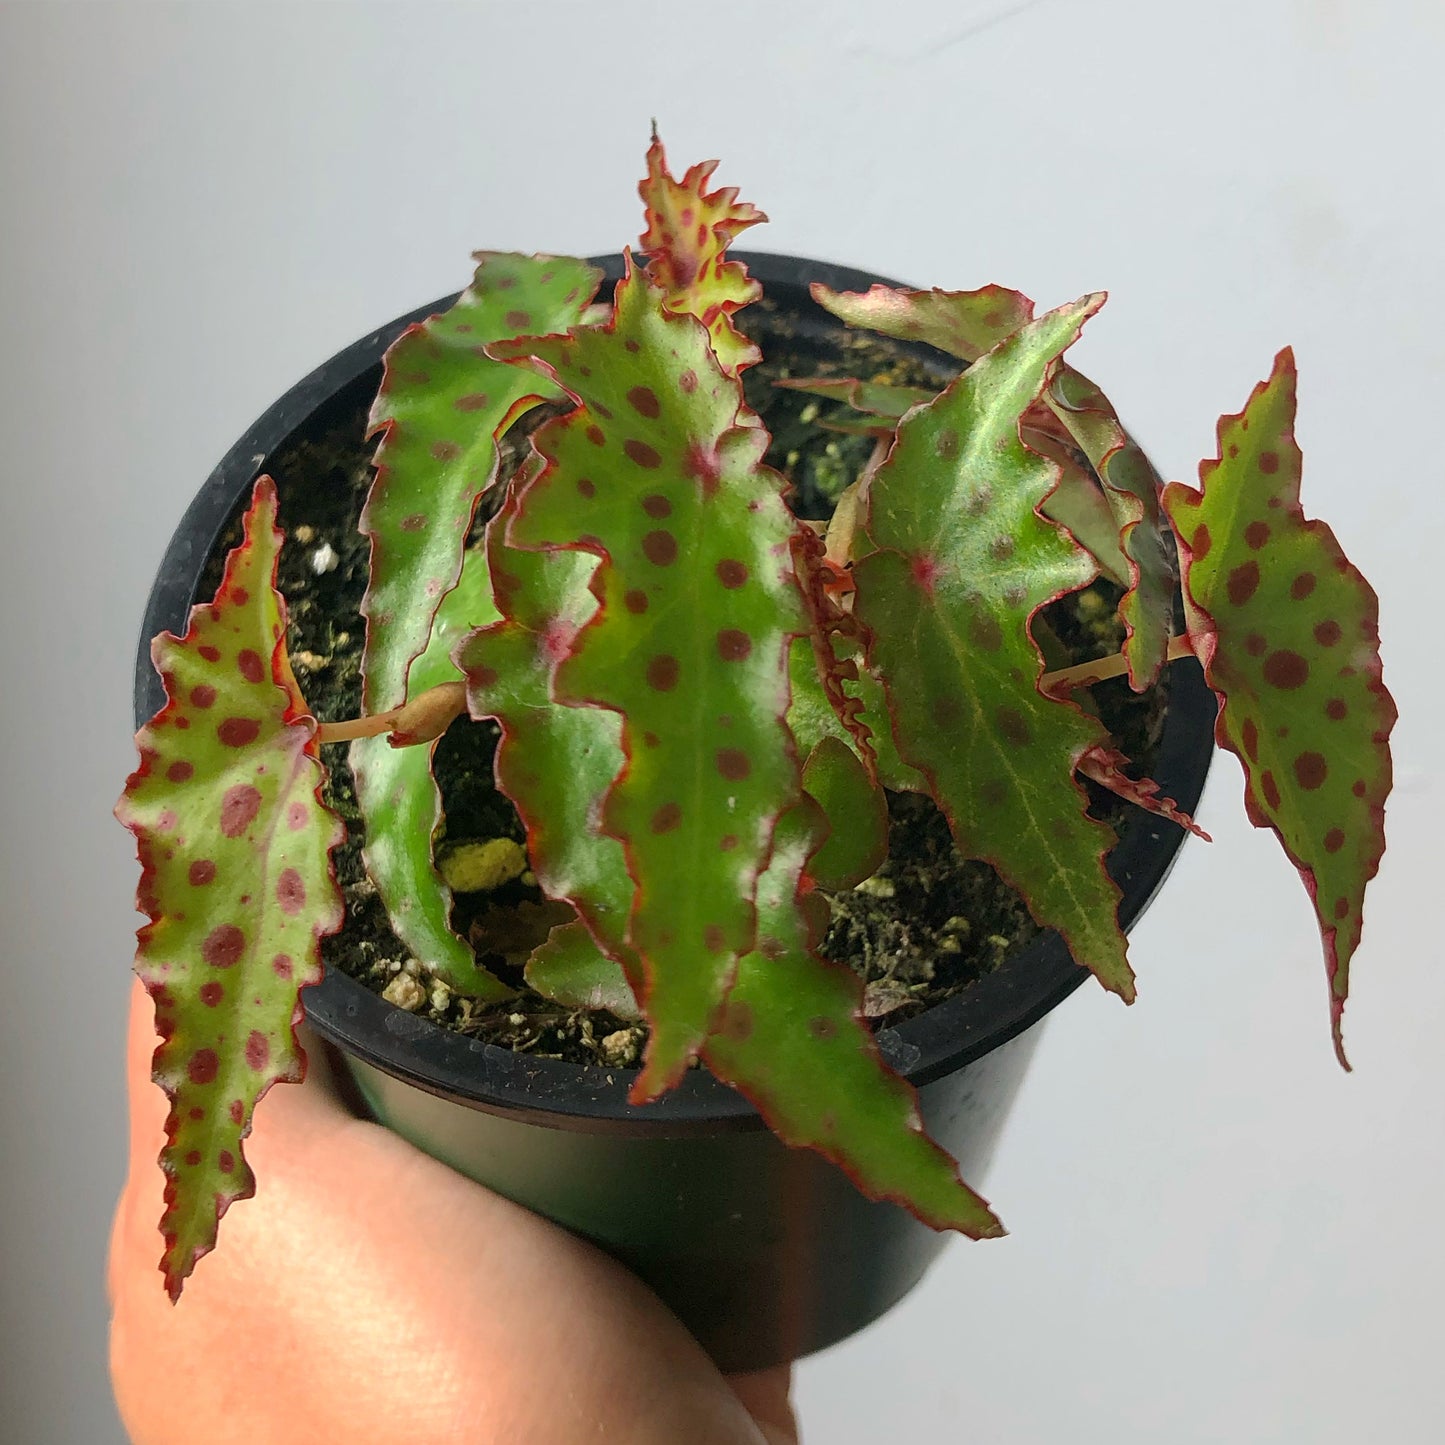 3.5" Begonia amphioxus